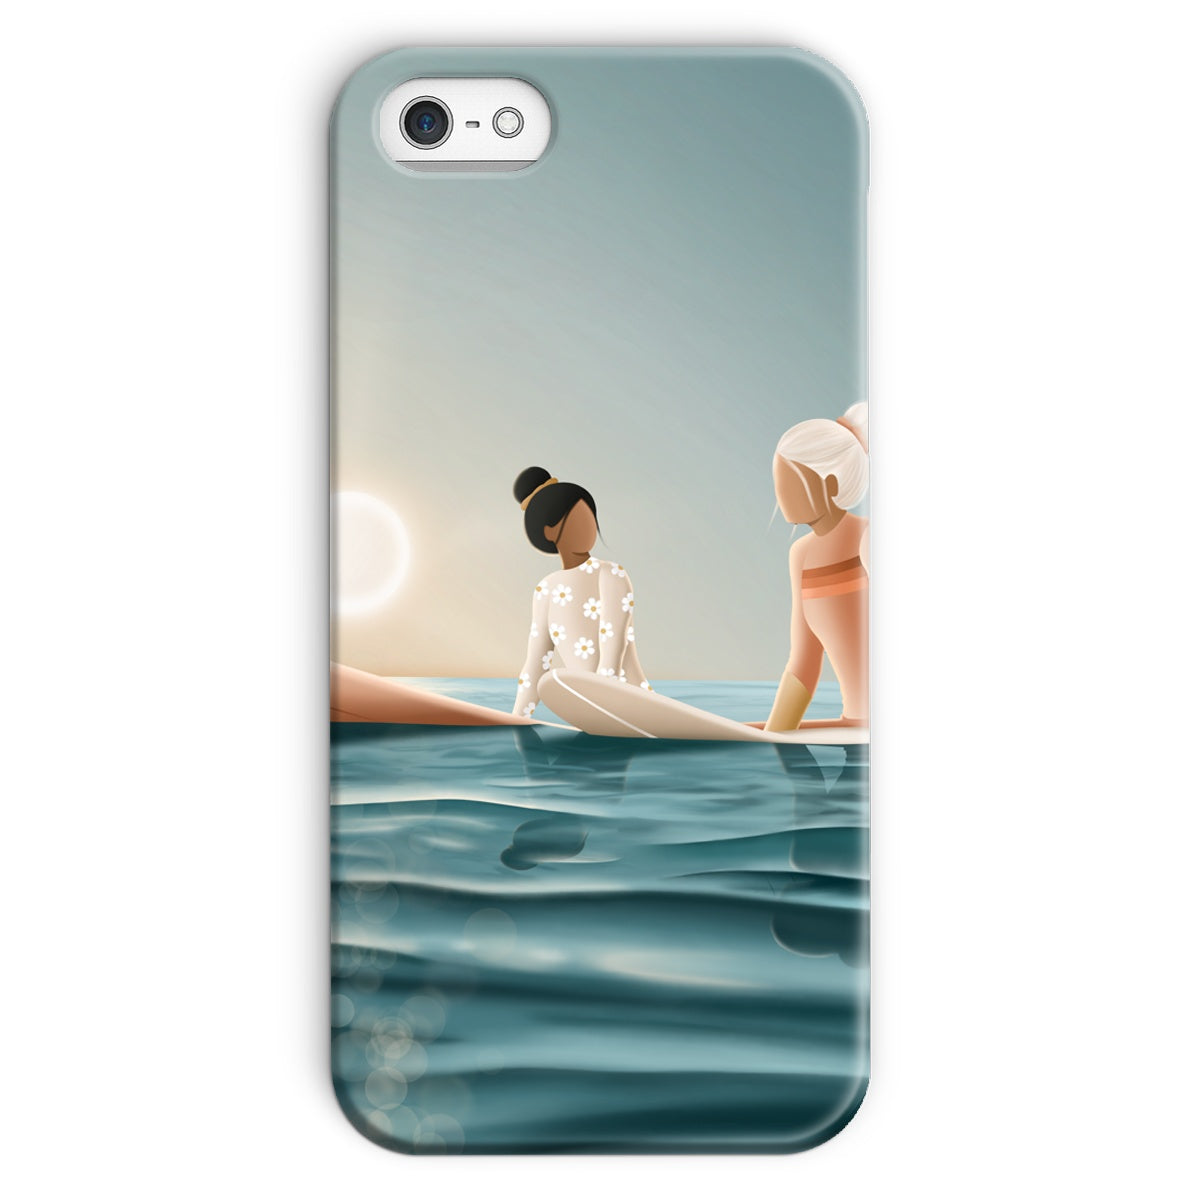 Slim Morning surf session phone case